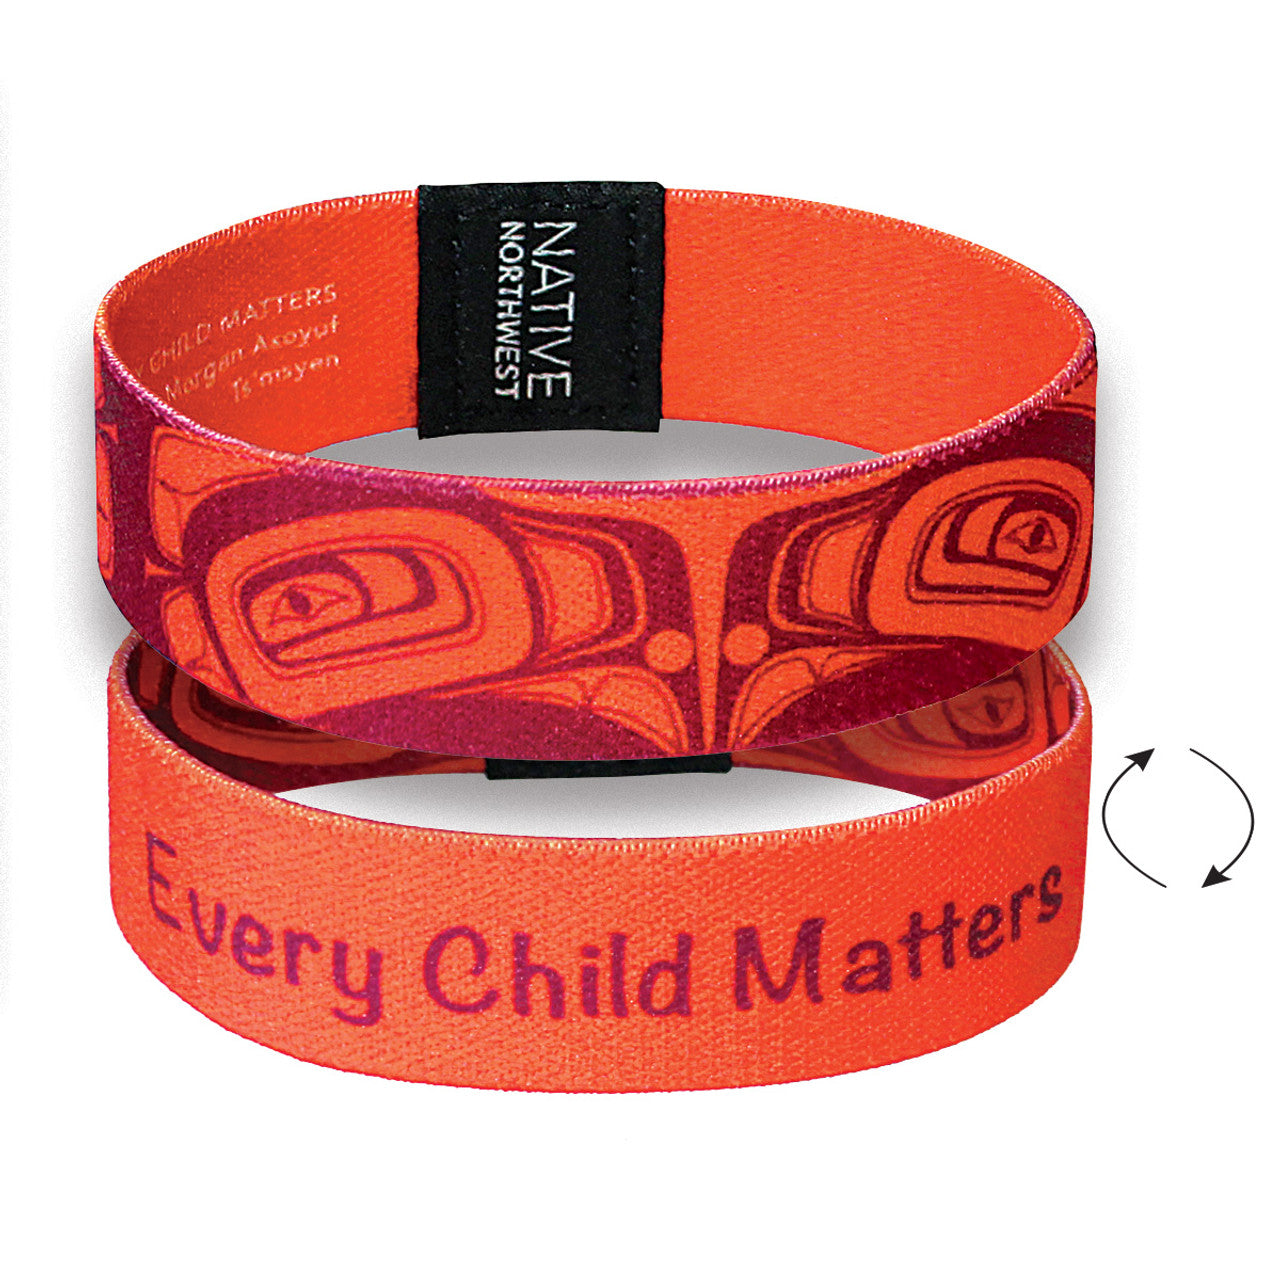 Every Child Matters Wristband - Chrysler Museum Shop